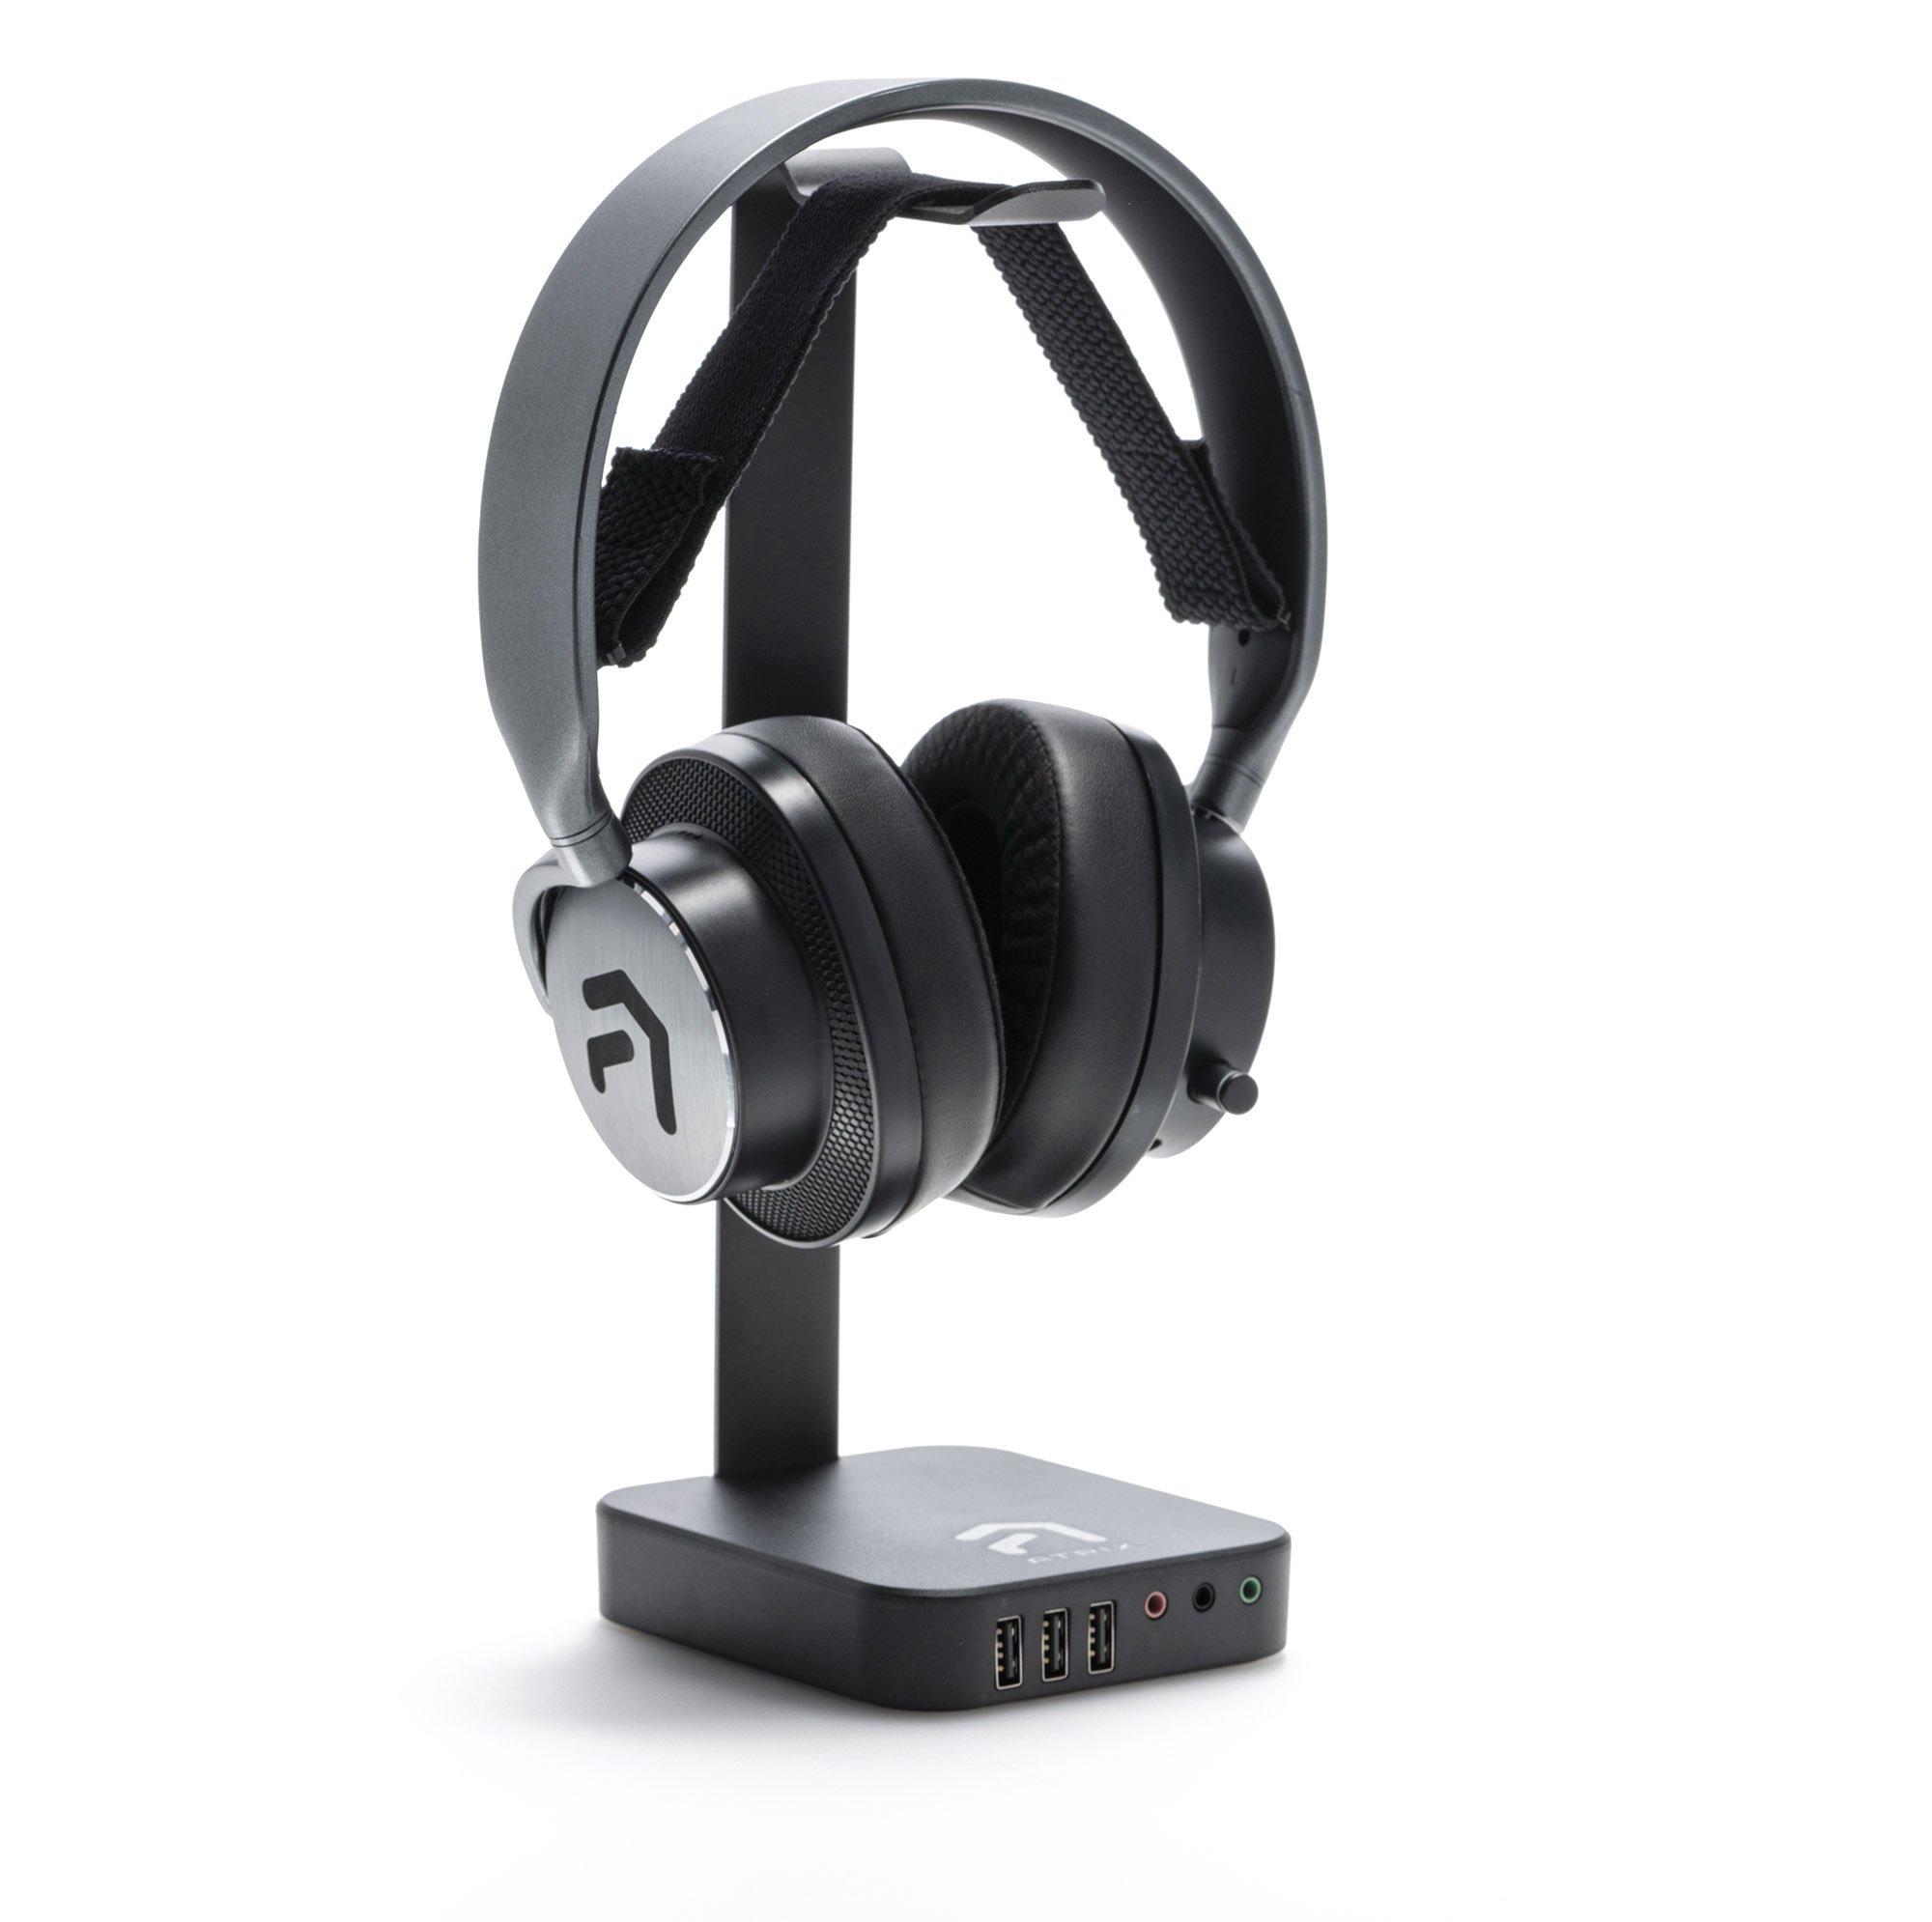 Beundringsværdig Begrænse Initiativ Atrix Headset Charging and Audio Stand GameStop Exclusive | GameStop